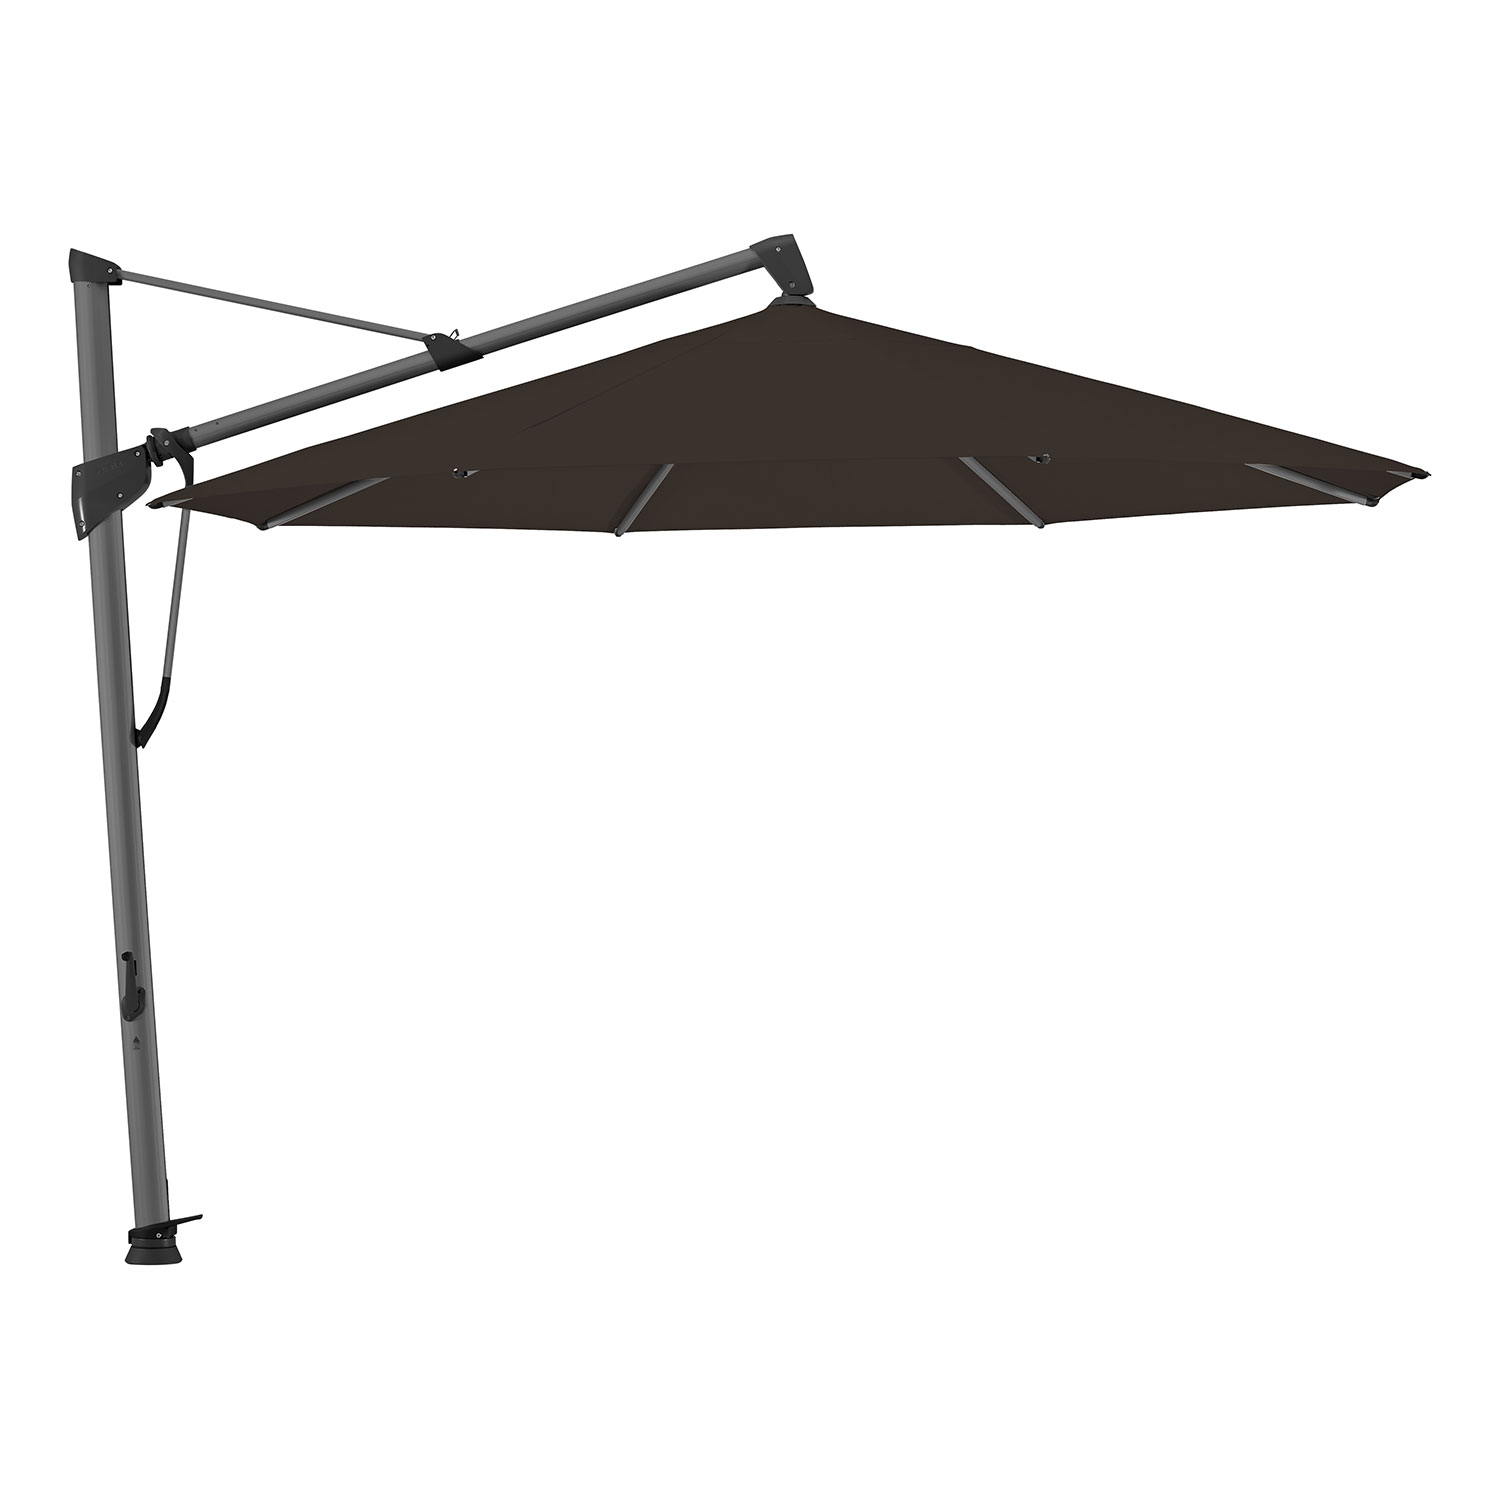 Glatz Sombrano S+ vapaasti riippuva aurinkovarjo 400 cm kat. 4 antracite alu / 408 black Glatz